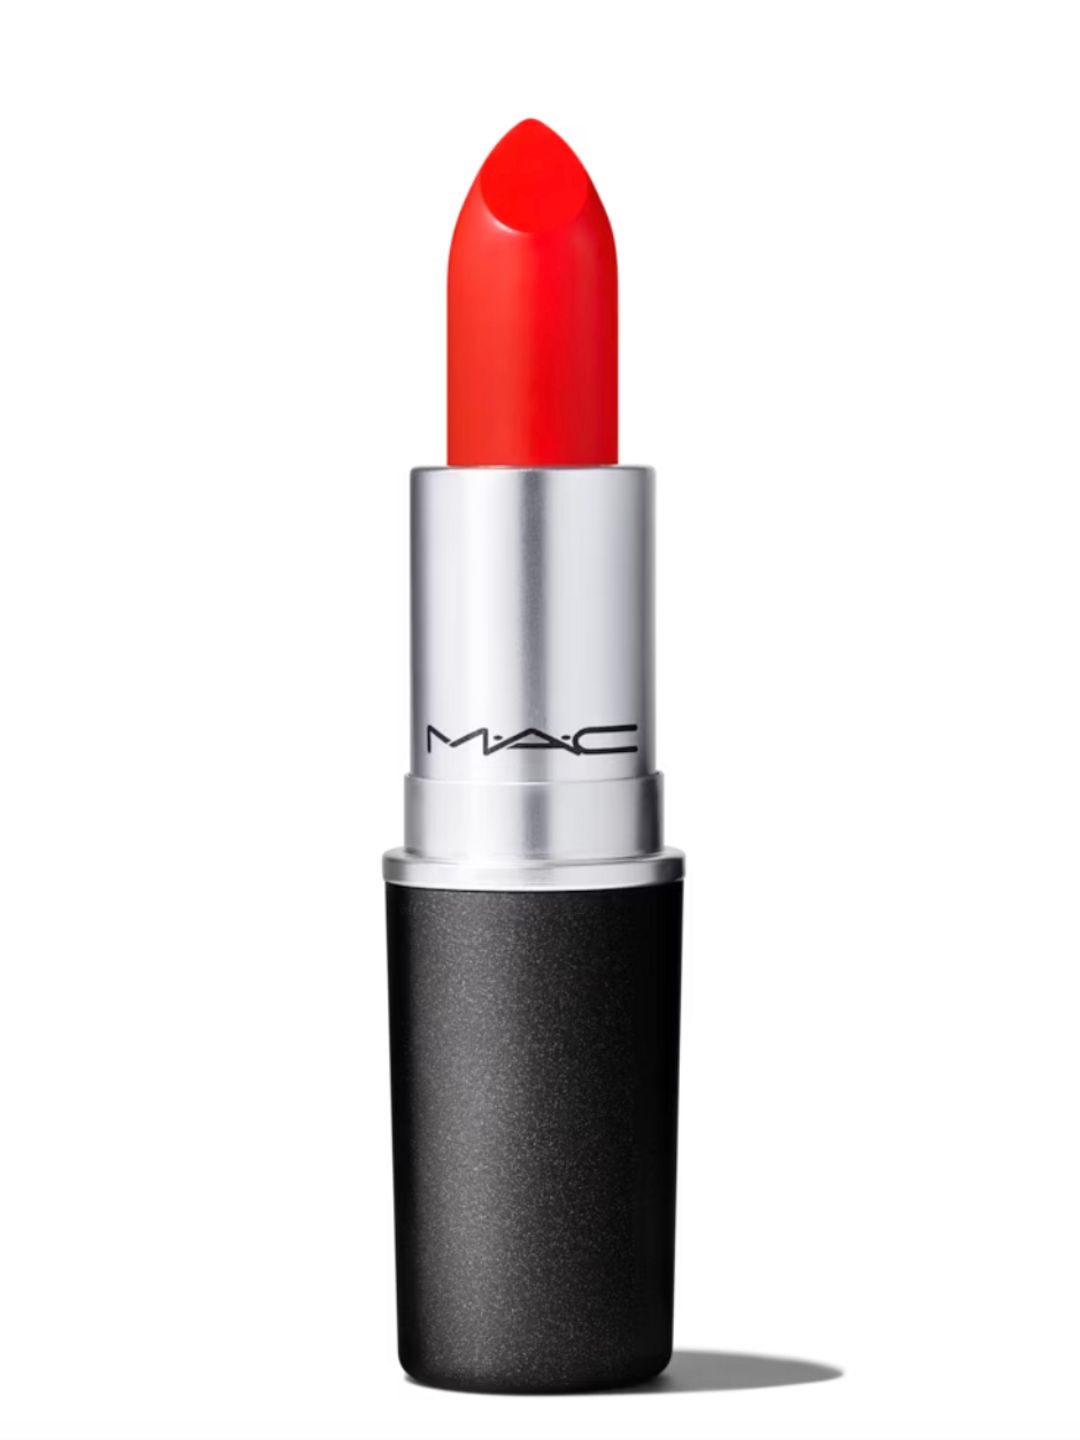 Red lipstick - Mac